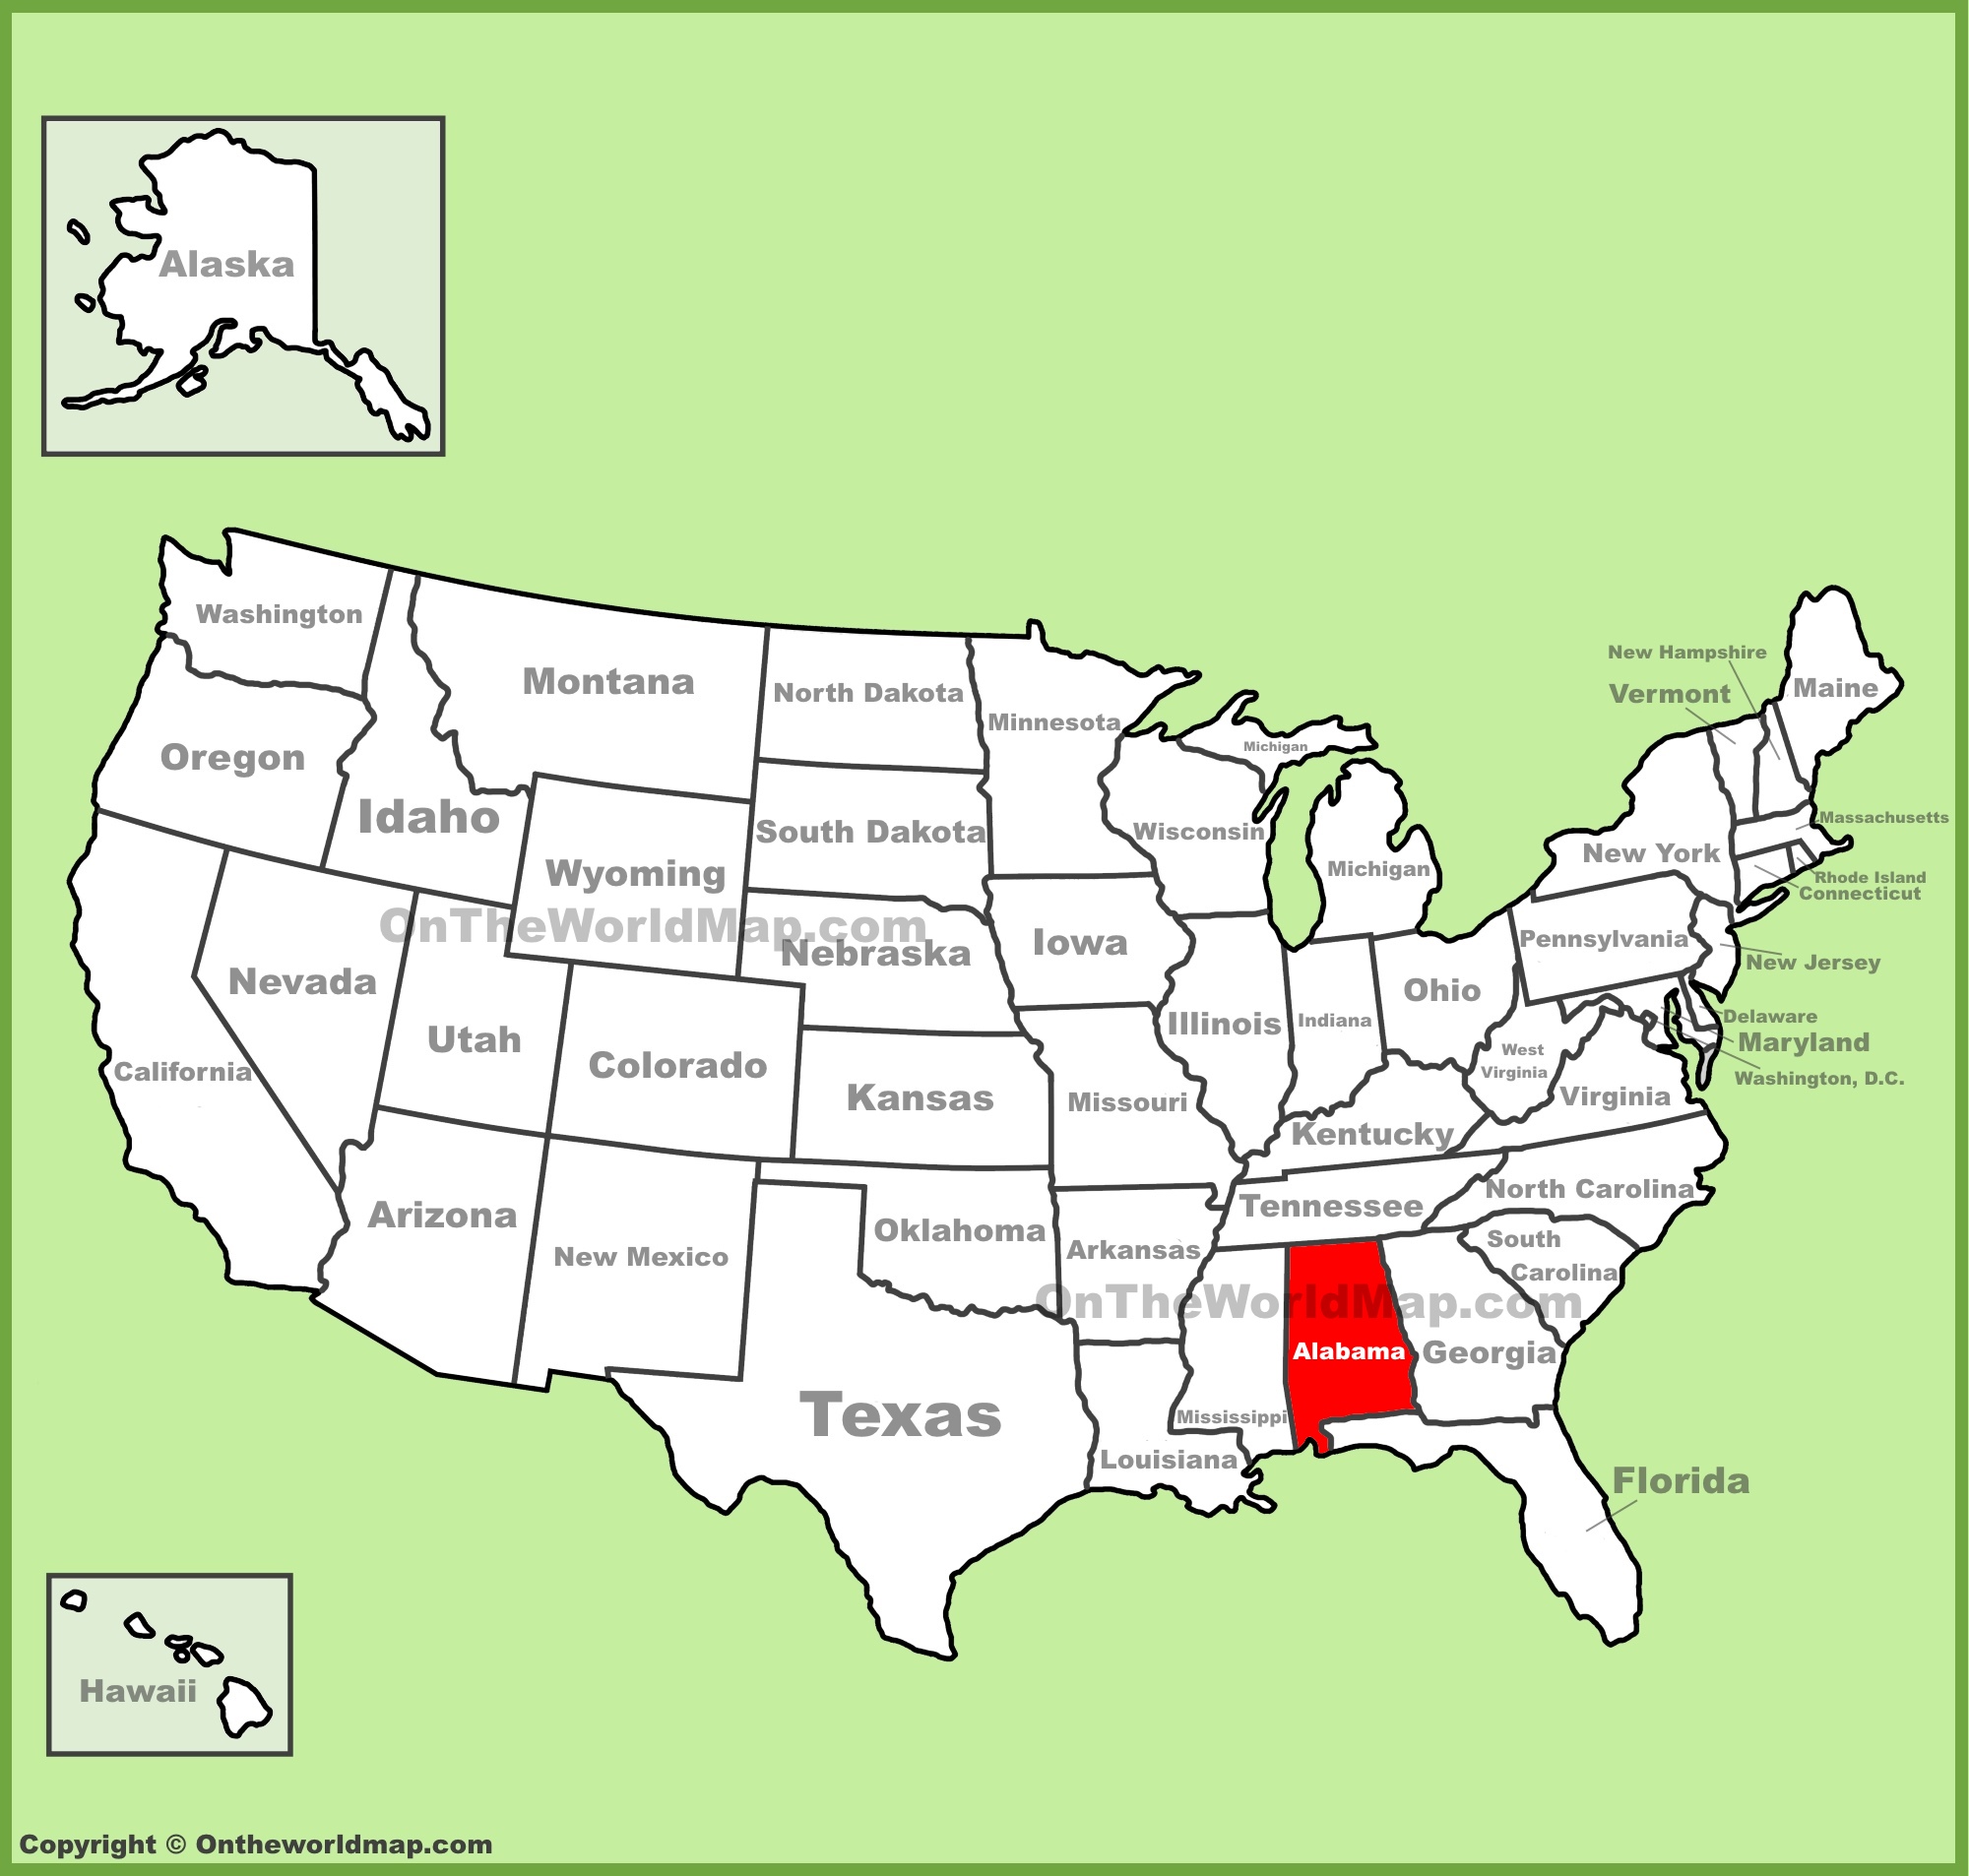 Alabama State Maps | USA | Maps of Alabama (AL) ﻿